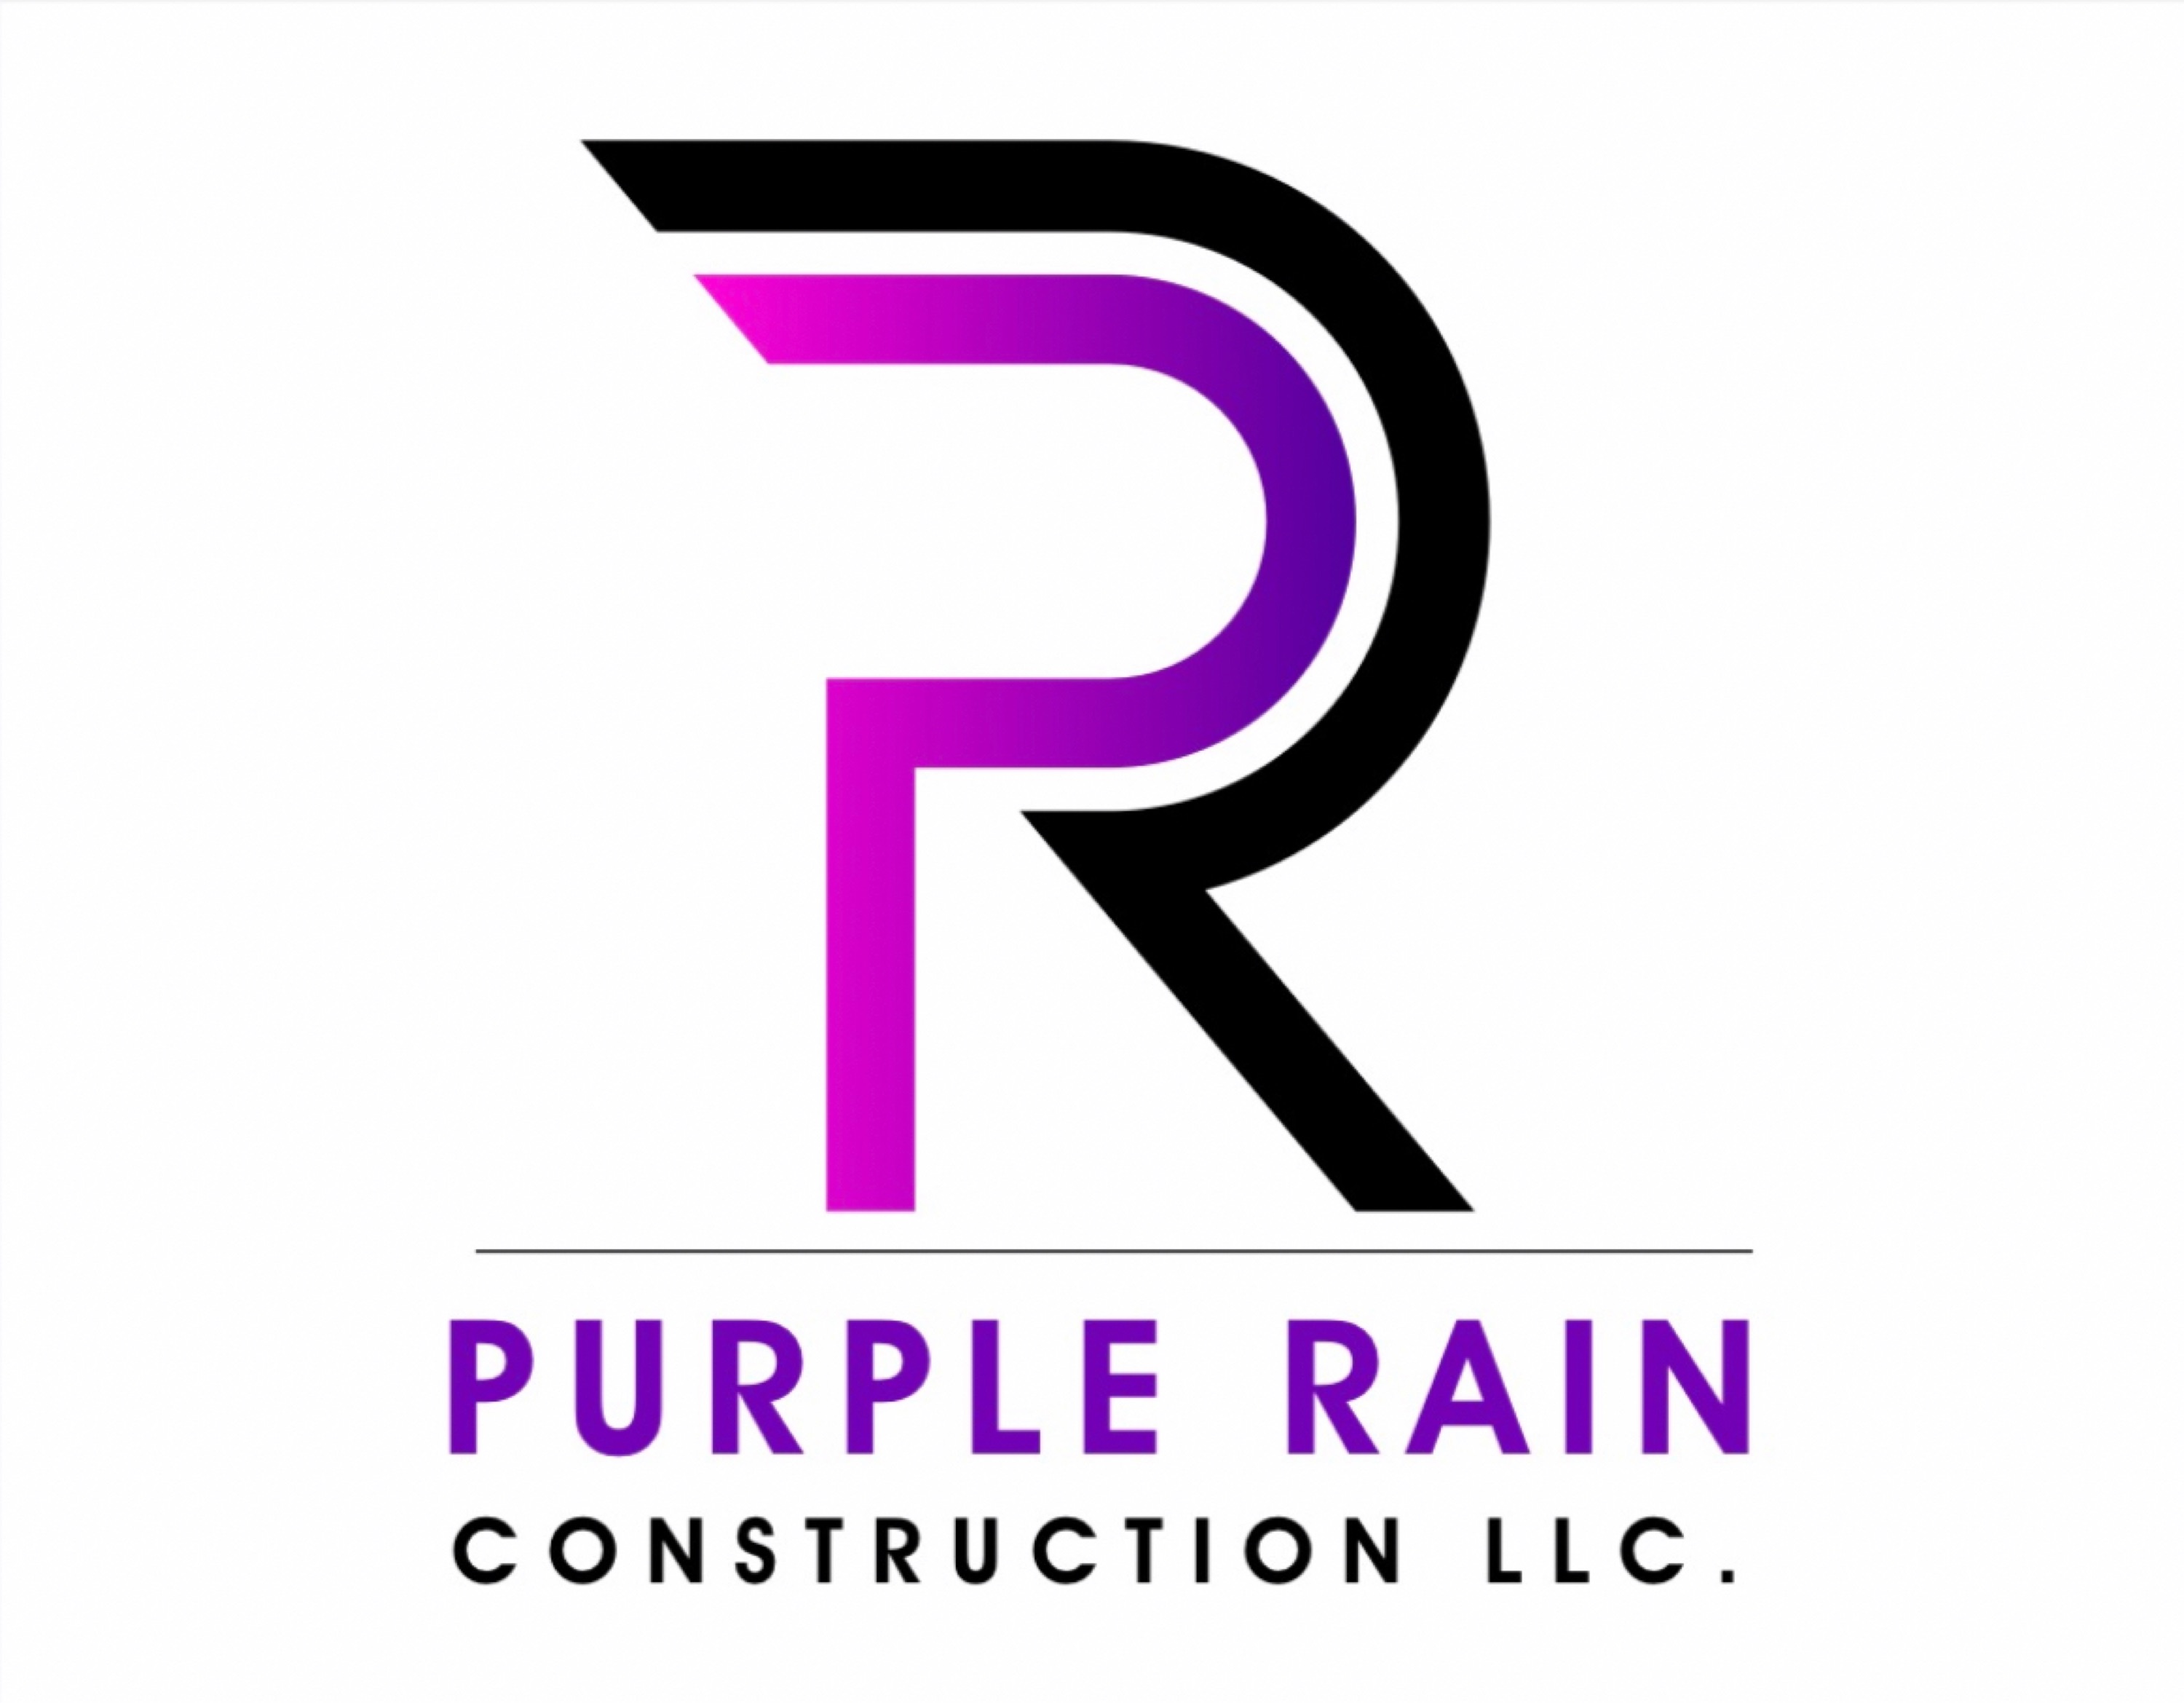 PURPLE RAIN CONSTRUCTION LLC Logo